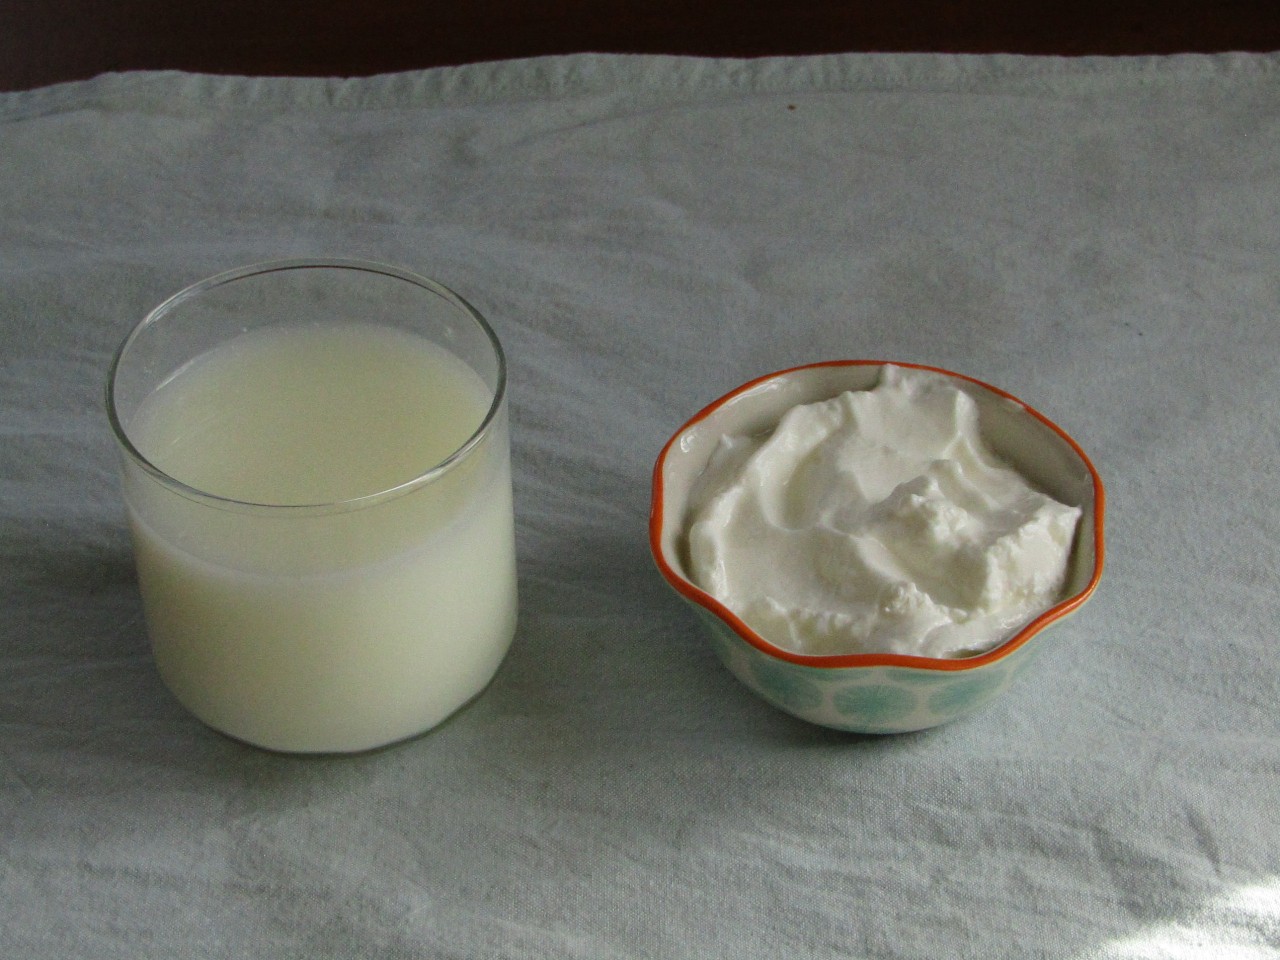 small glass of kefir and a small bowl of yogurt